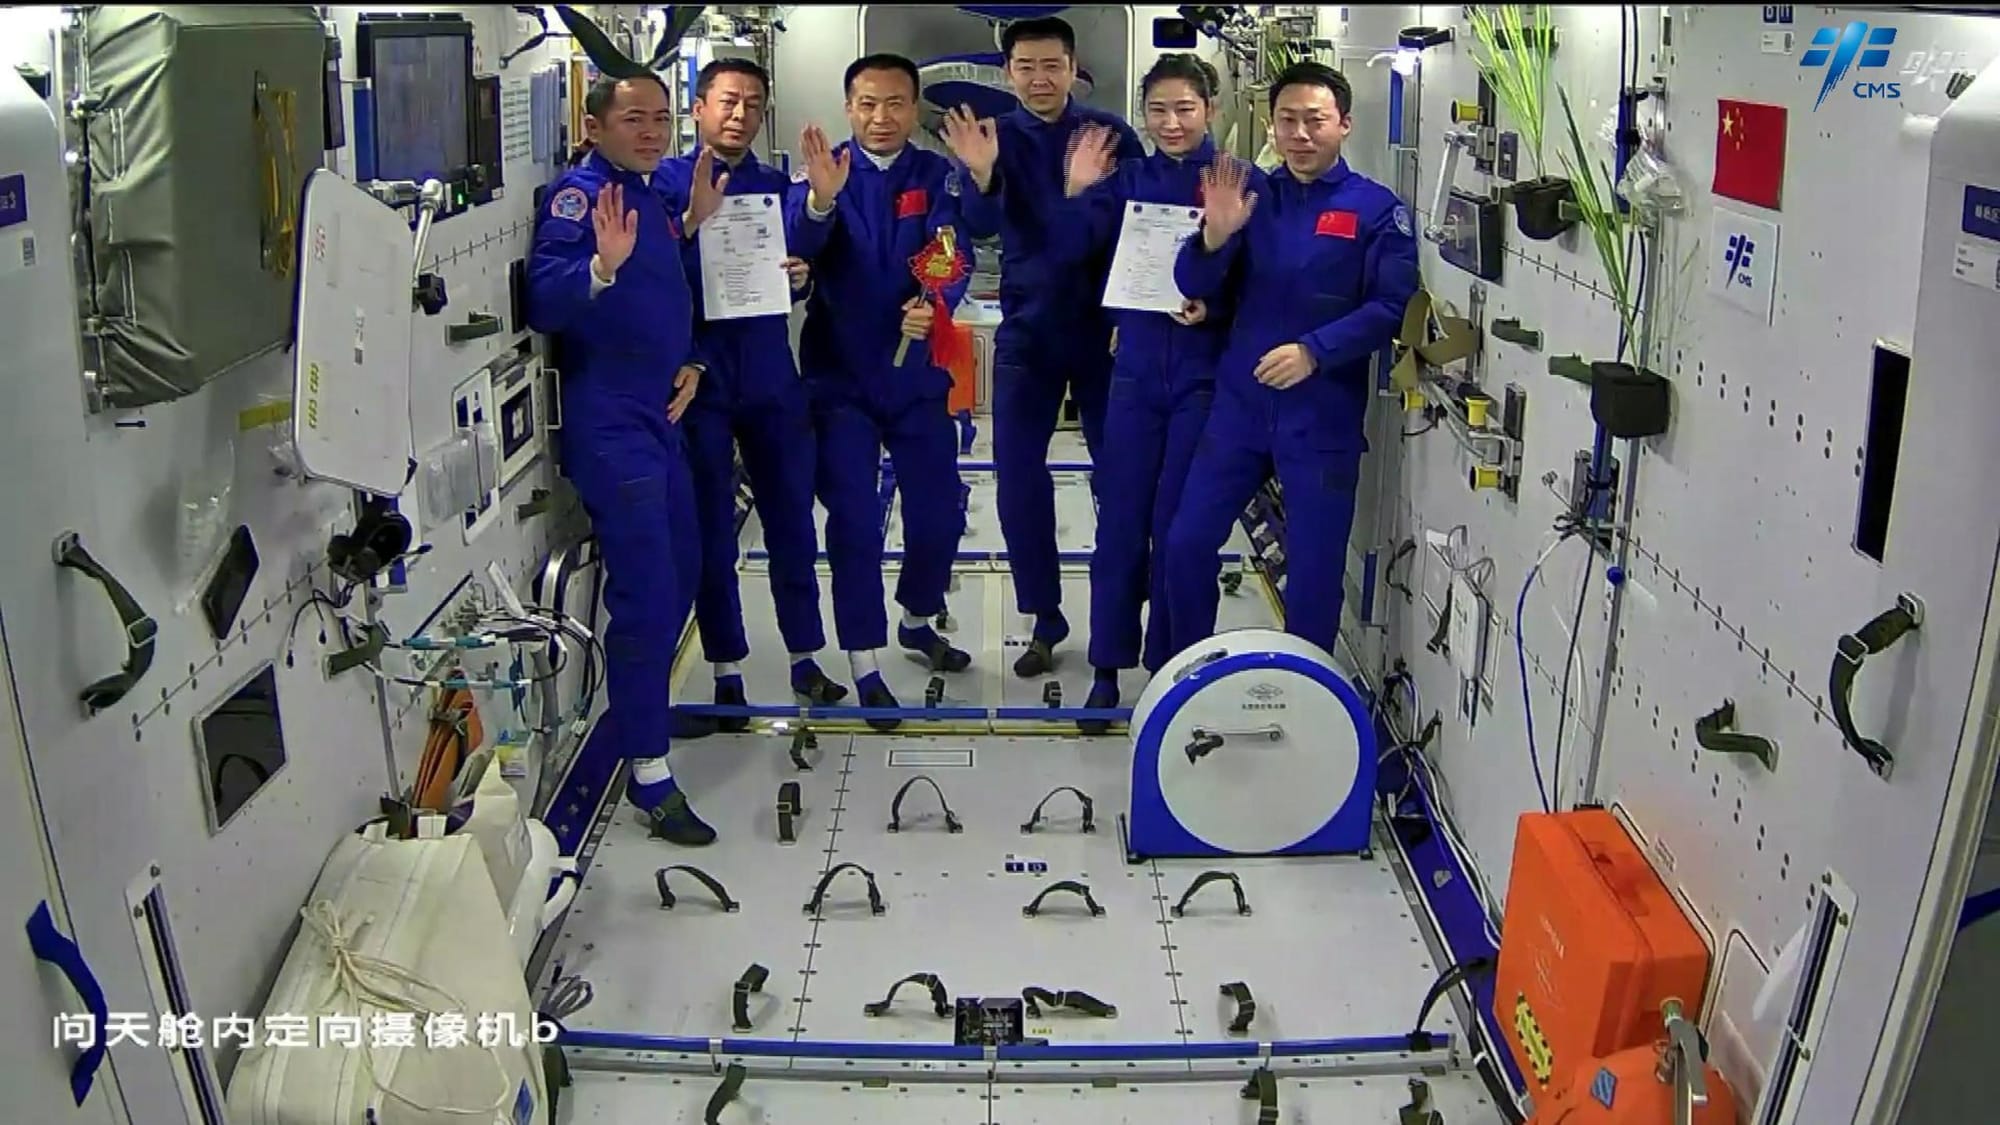 The Shenzhou-14 and Shenzhou-15 crews during a handover ceremony inside the Tianhe module, (from left to right) Zhang Lu, Deng Qingming, Fei Junlong, Cai Xuzhhe, Liu Yang, and Chen Dong. ©China Manned Space Agency